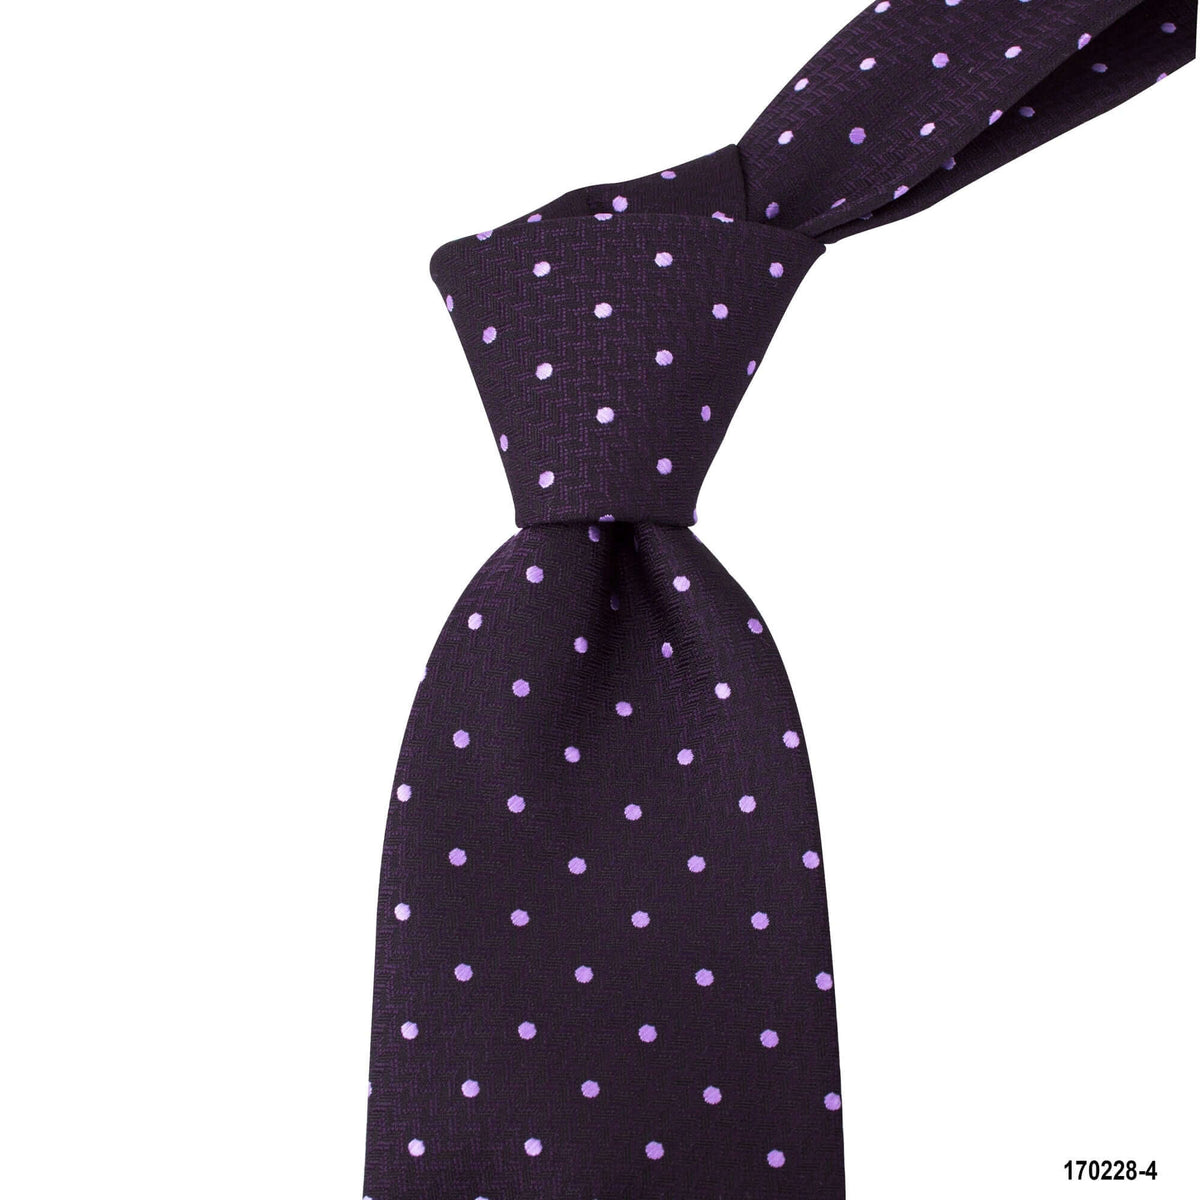 8cm Polka Dot Tie in Purple-Cufflinks.com.sg | Neckties.com.sg